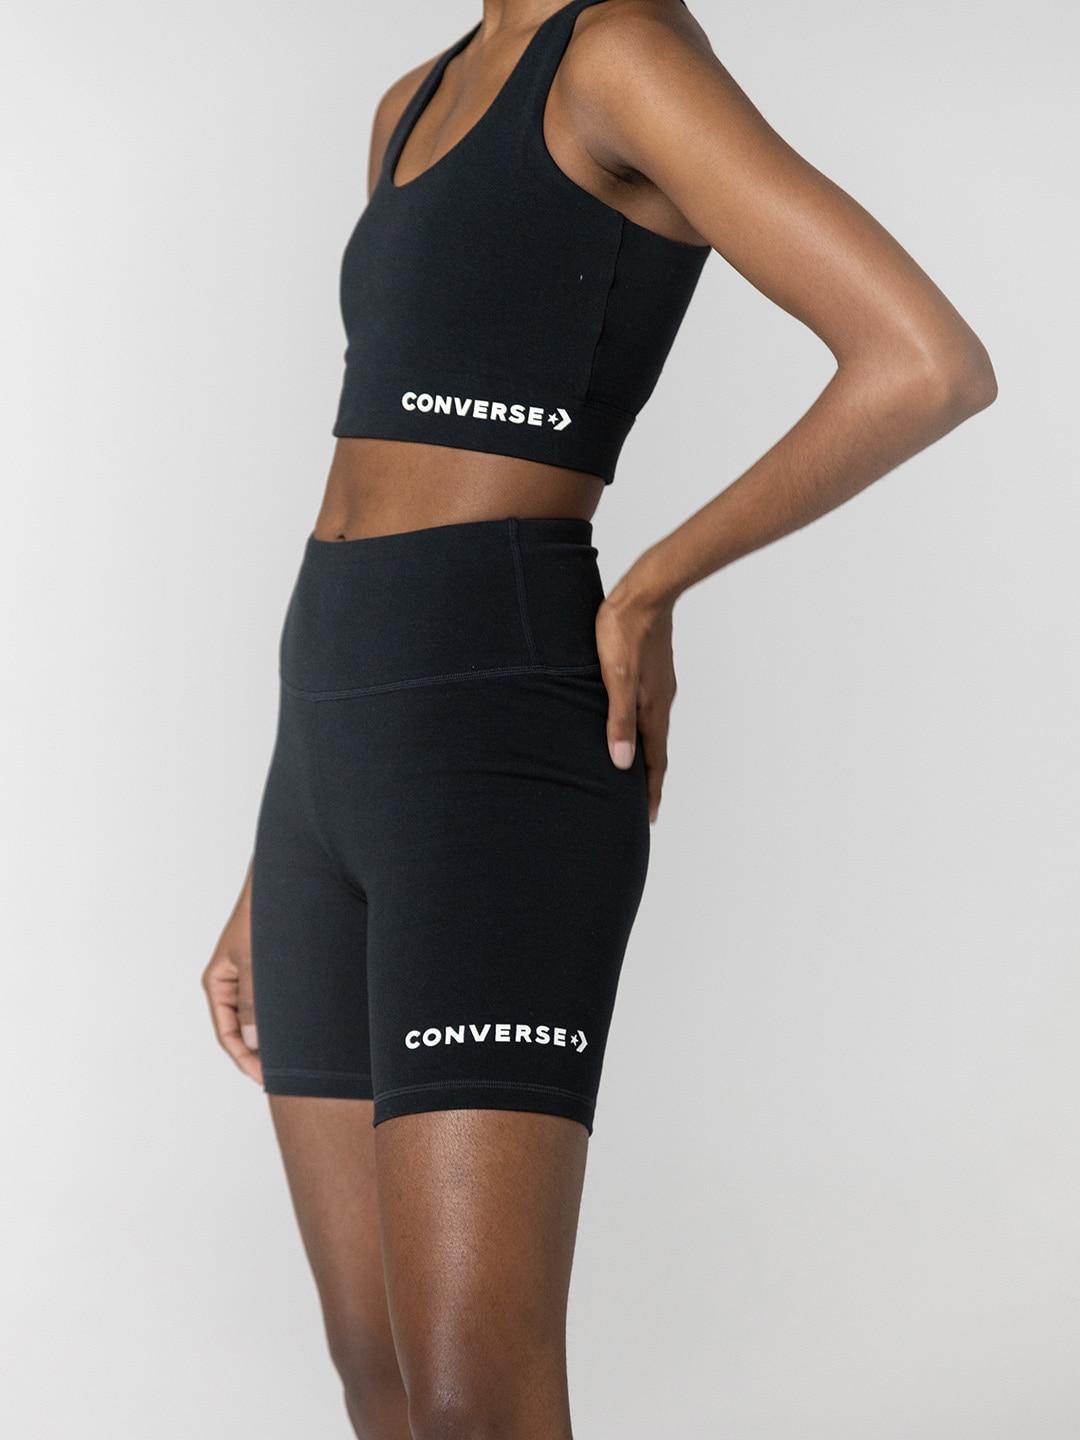 converse-women-wordmark-biker-shorts